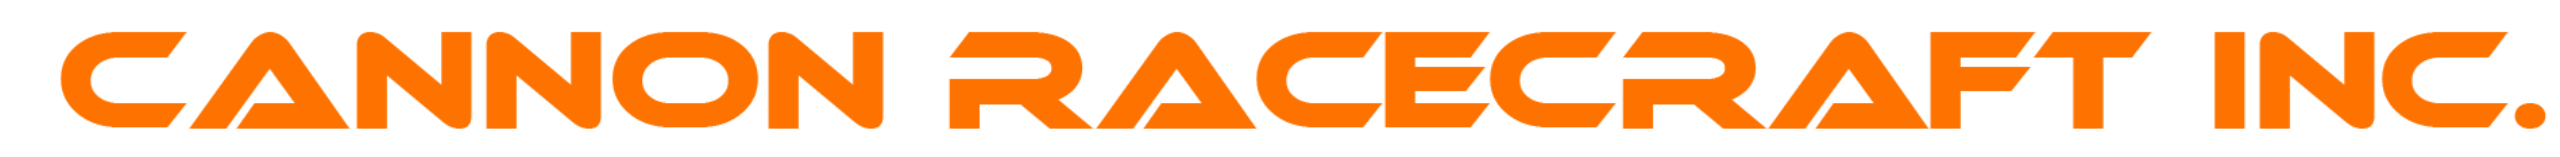 Cannon Racecraft, Inc. Logo